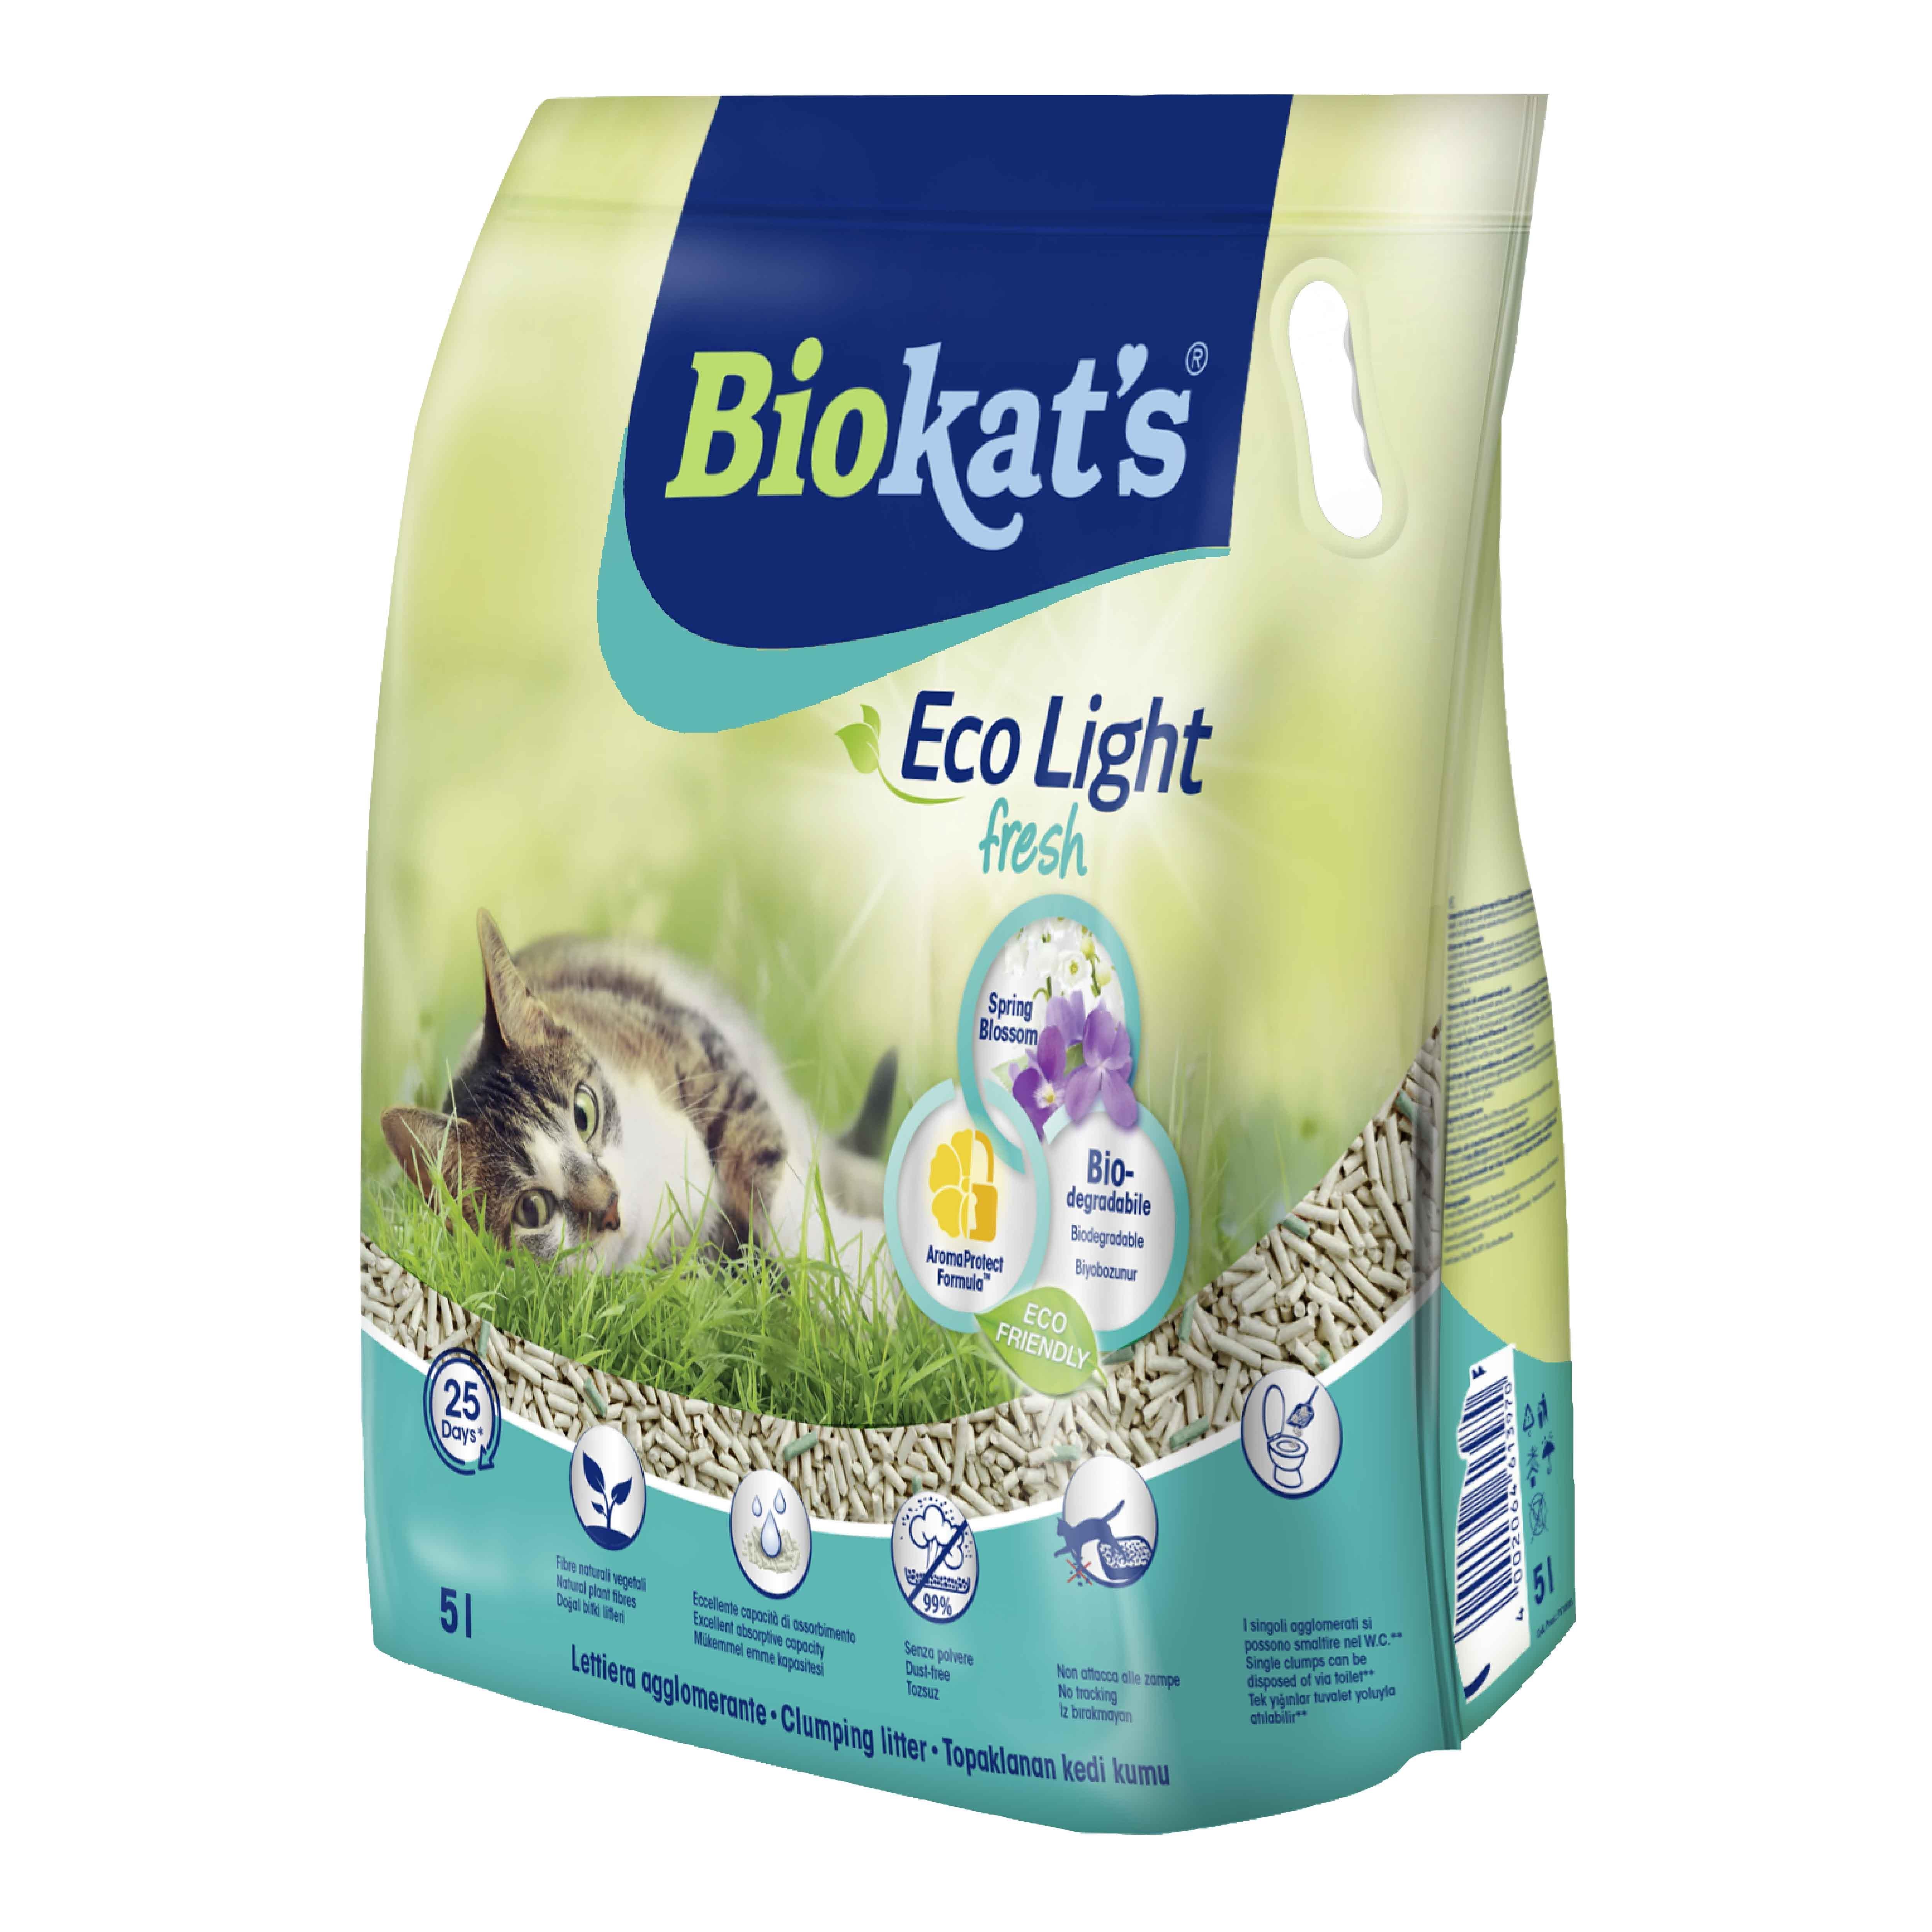 Biokat's Eco Light Fresh Spring Blossom (Bahar Çiçeği Kokulu) Pelet Kedi Kumu 5 Lt